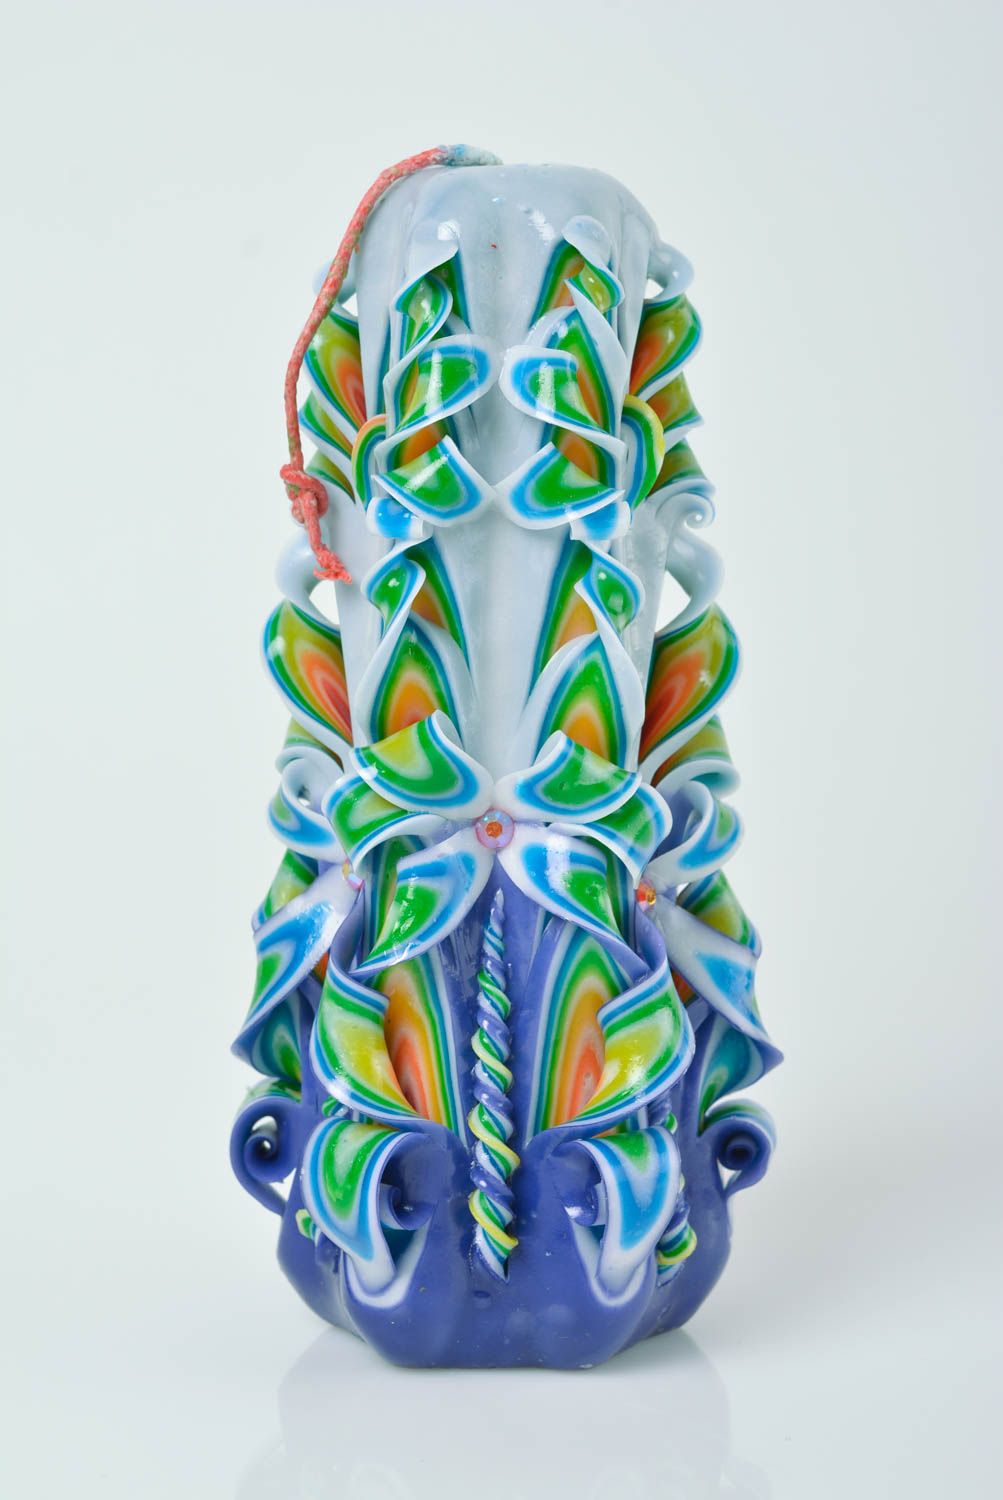 Bougie sculptée artisanale multicolore faite main grande originale décorative photo 1